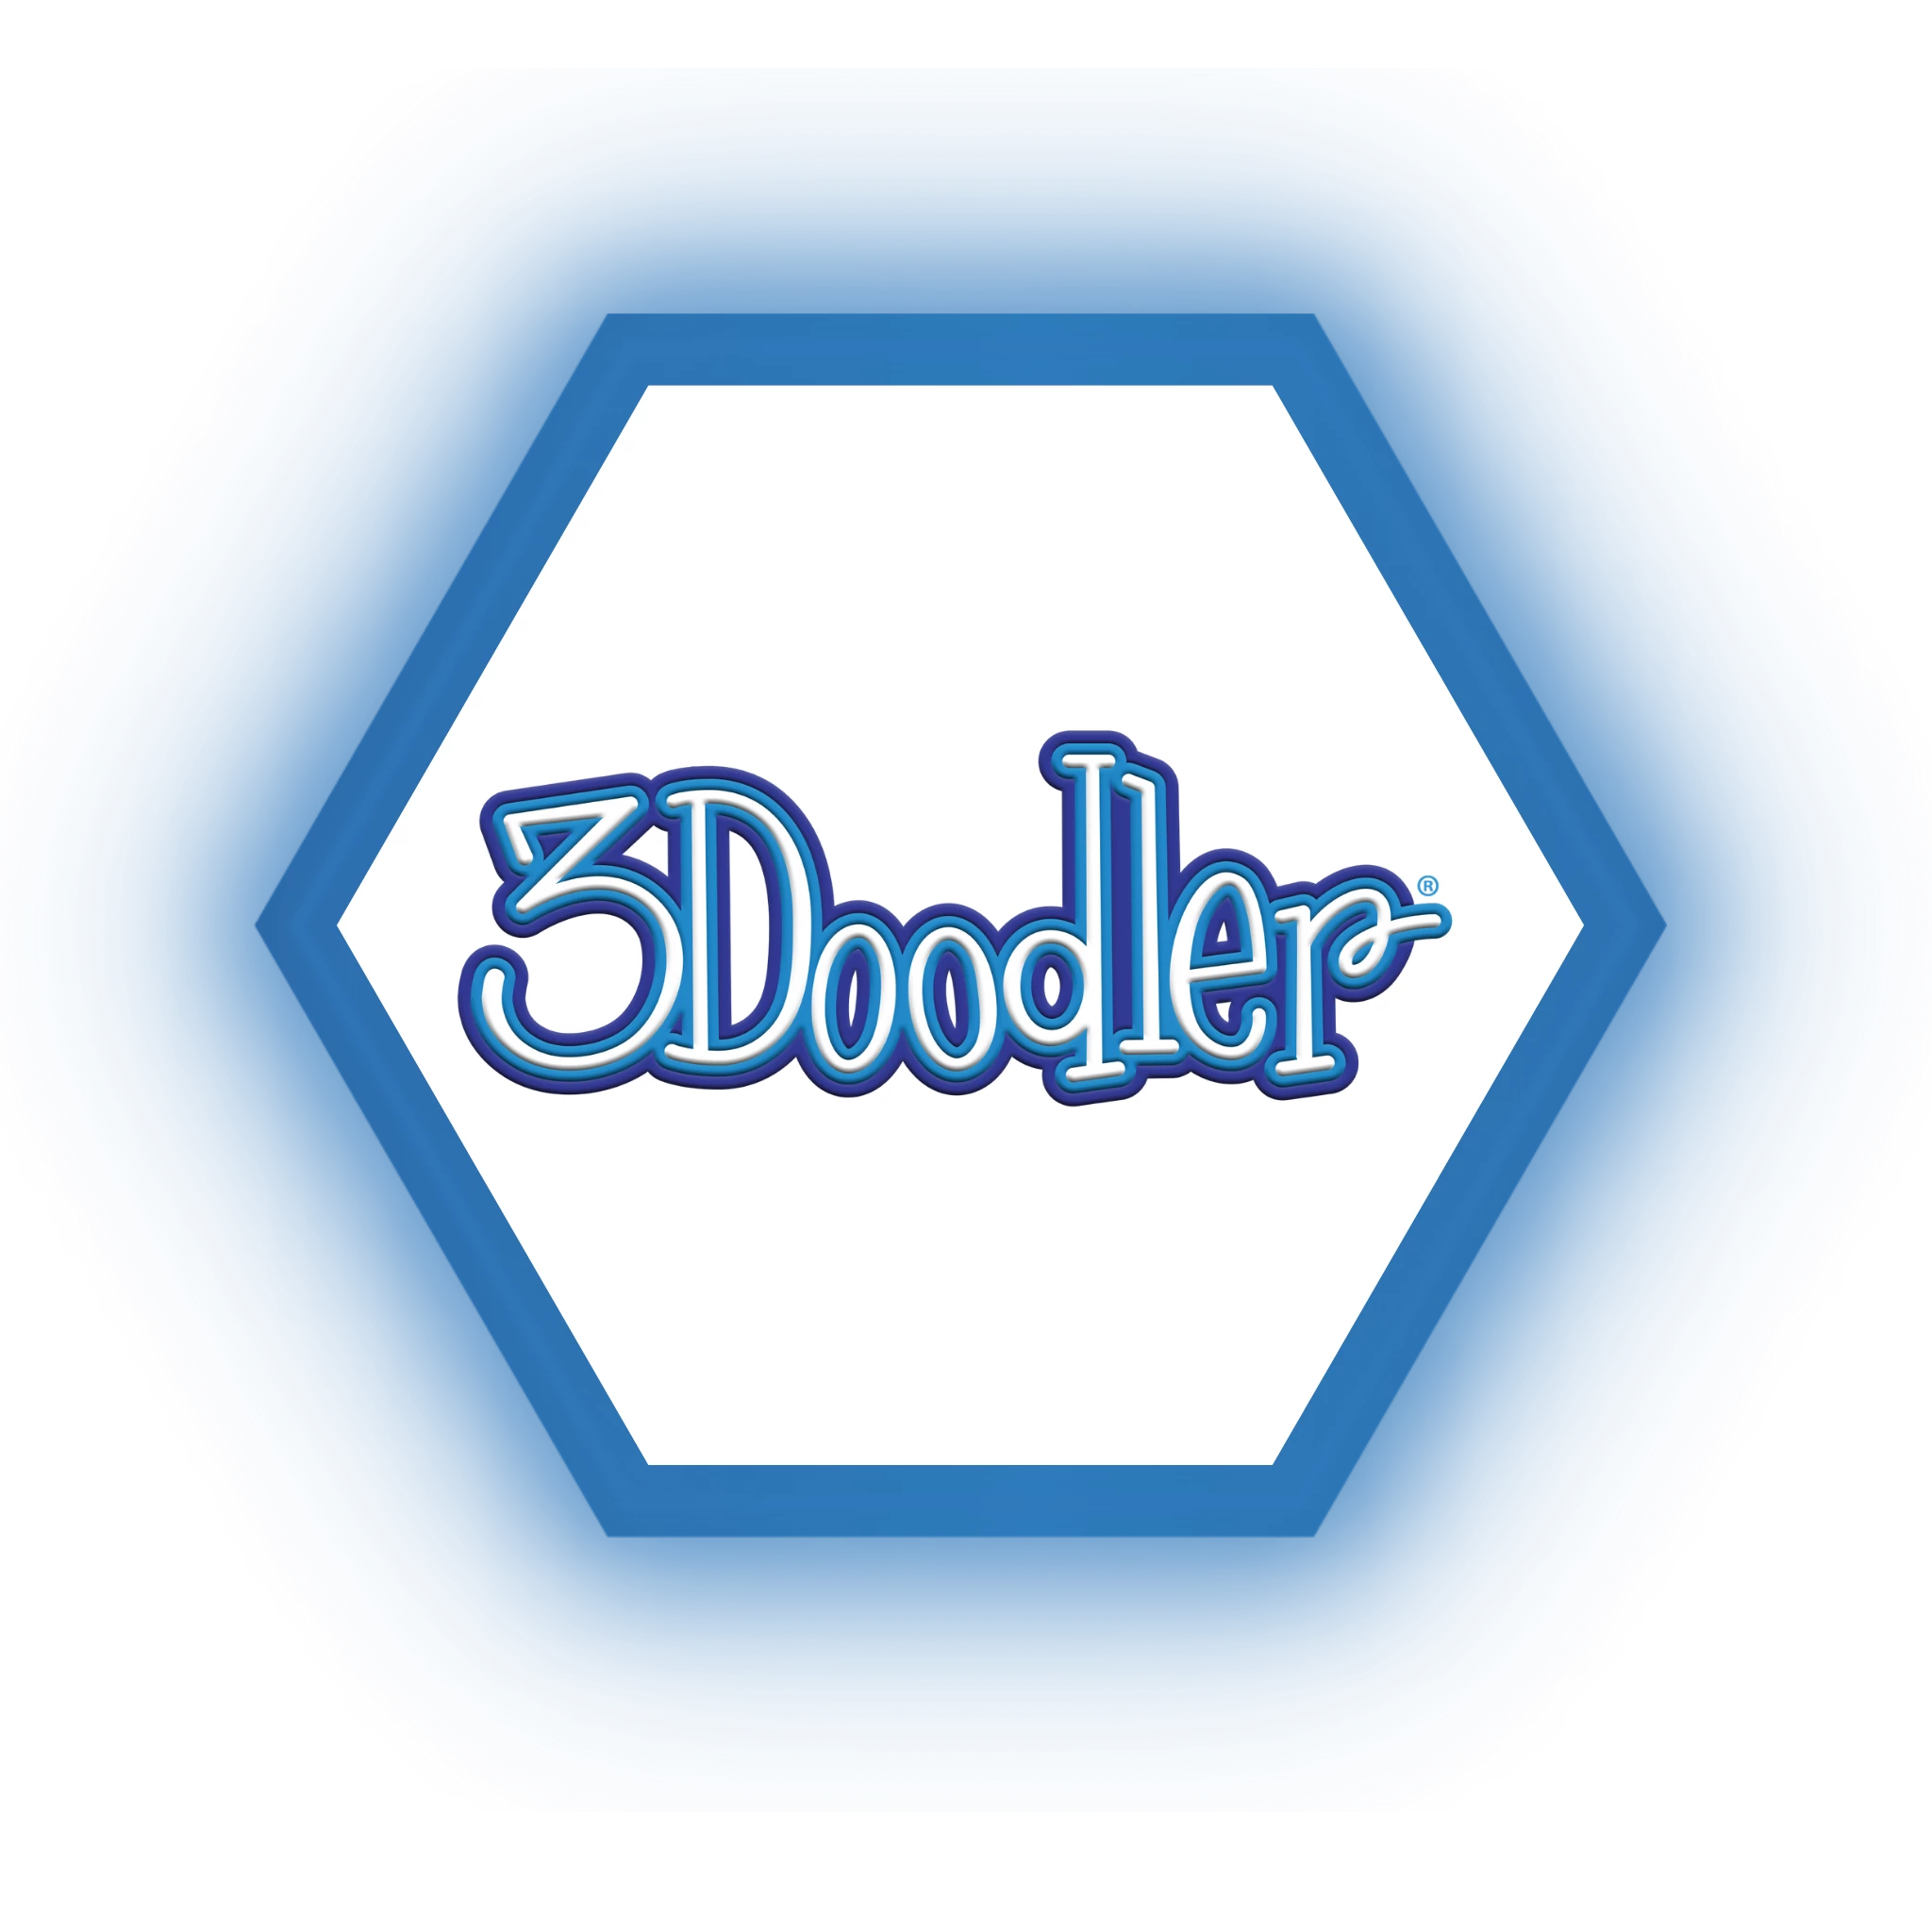 3Doodler Doodle Pad - Community Learning